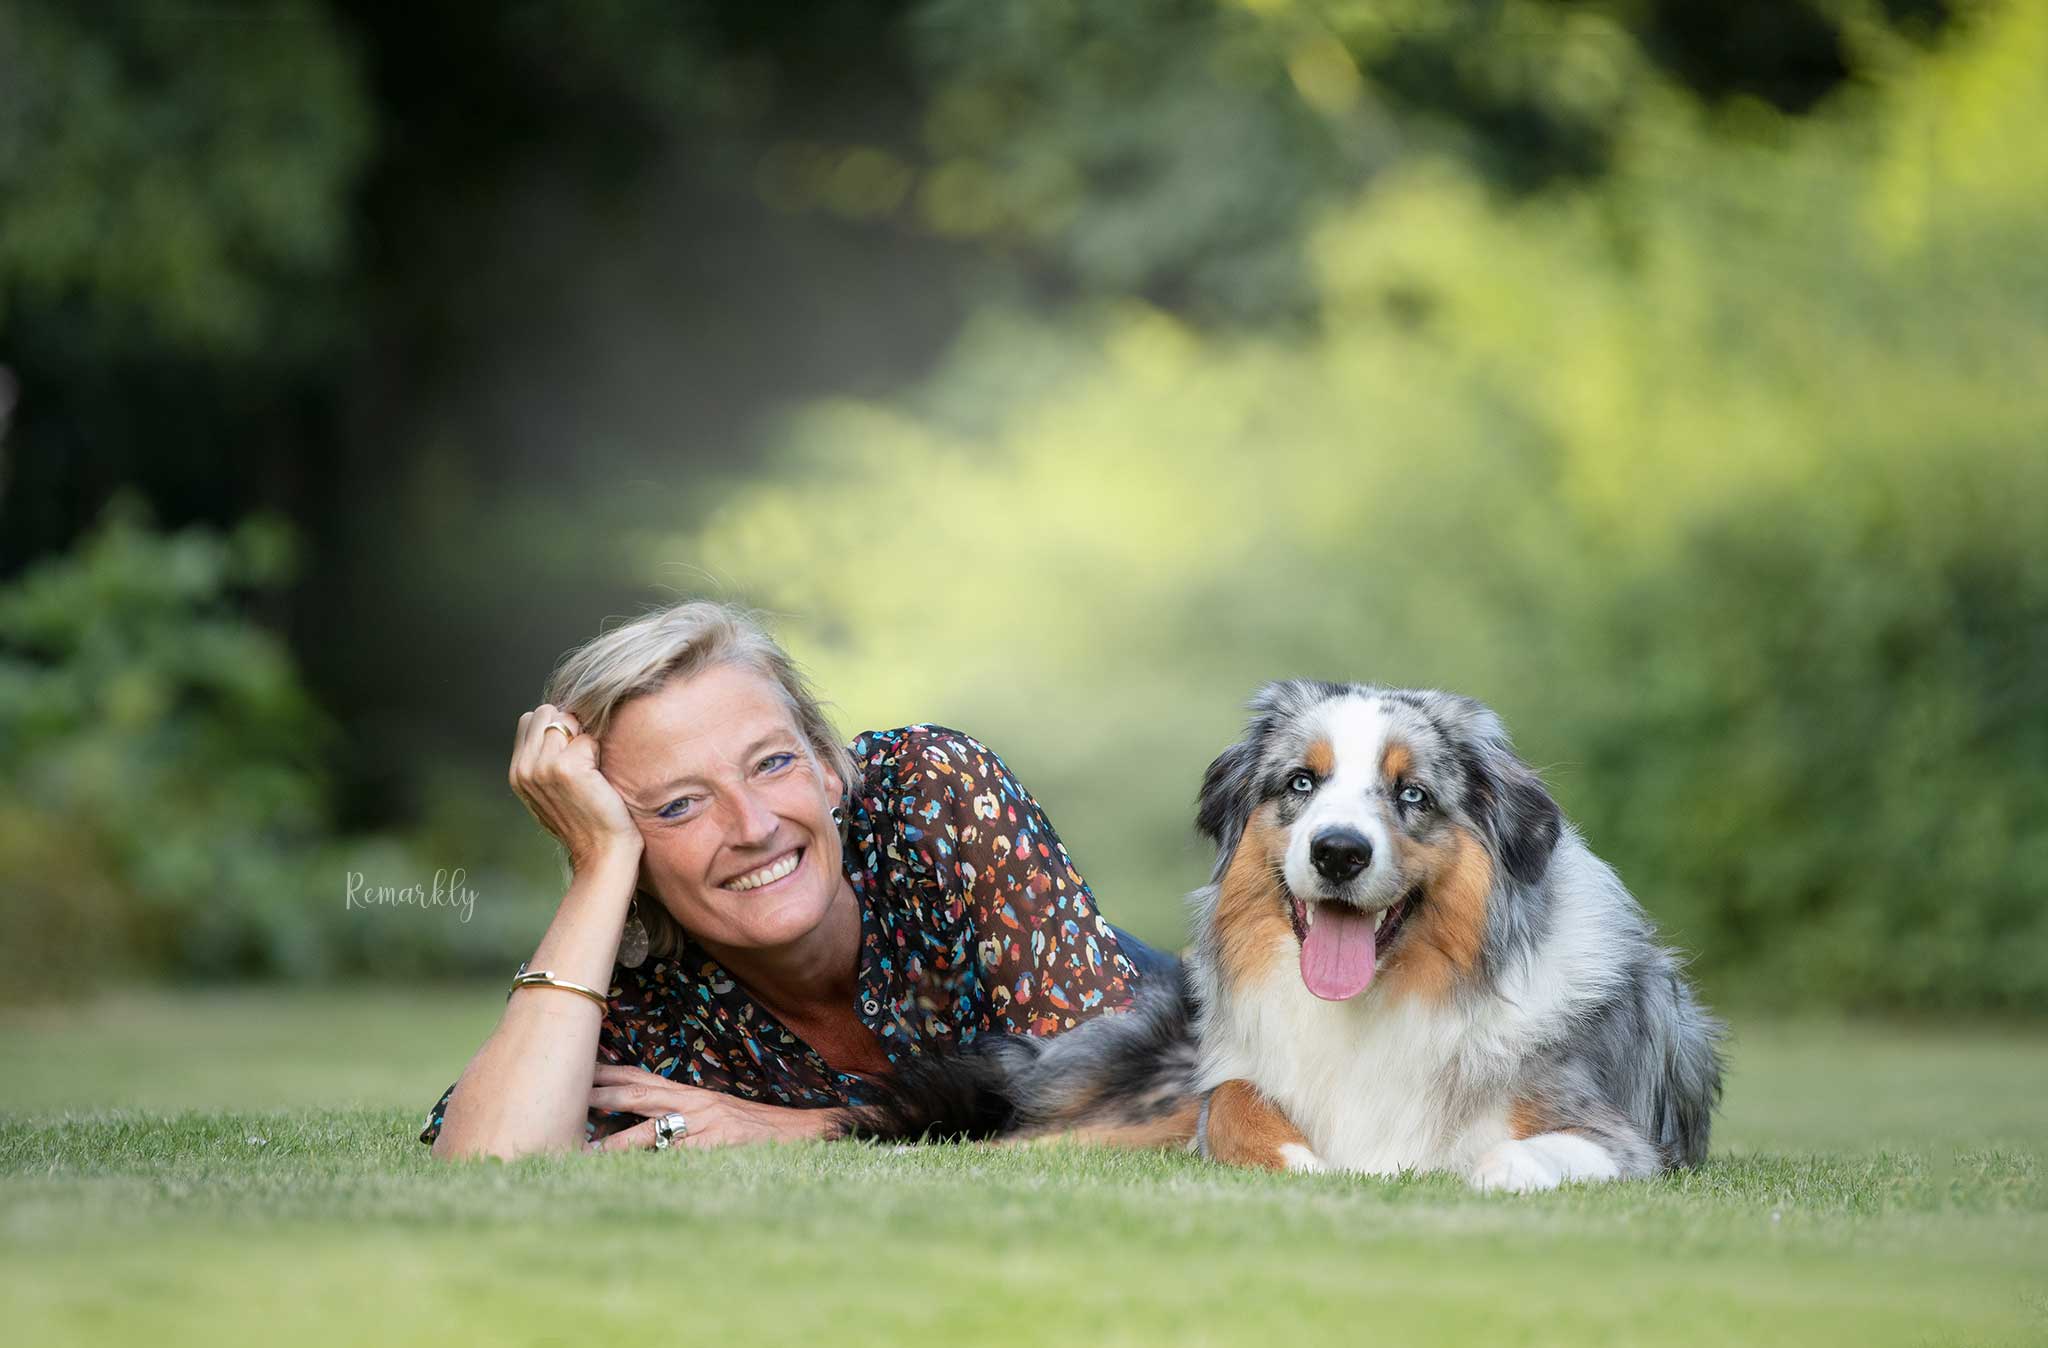 Remarkly Photography puppyshoot fotoshoot met hond Q Australische herder